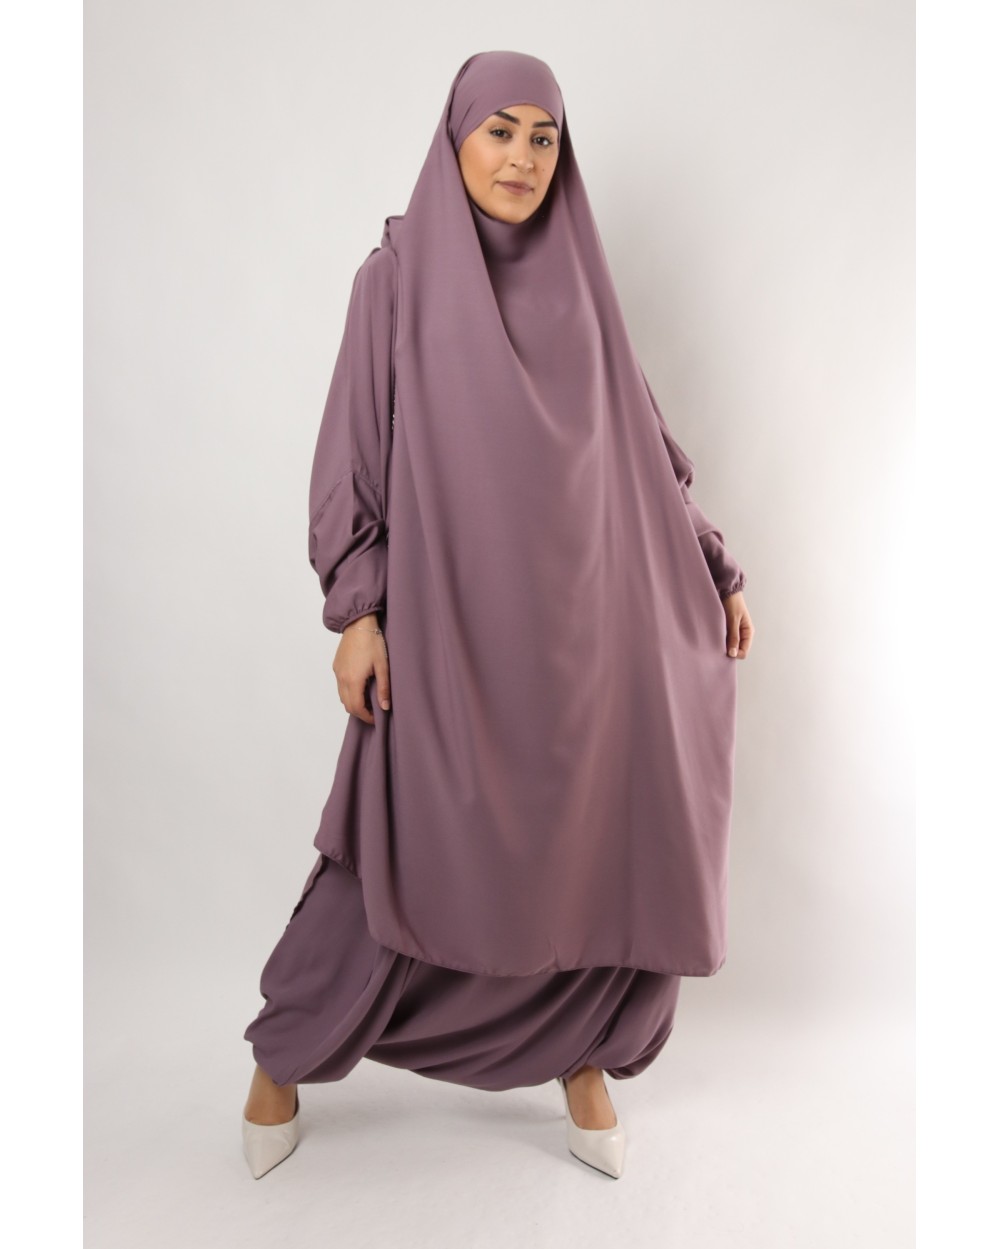 Nafissa jilbab and harem pants set